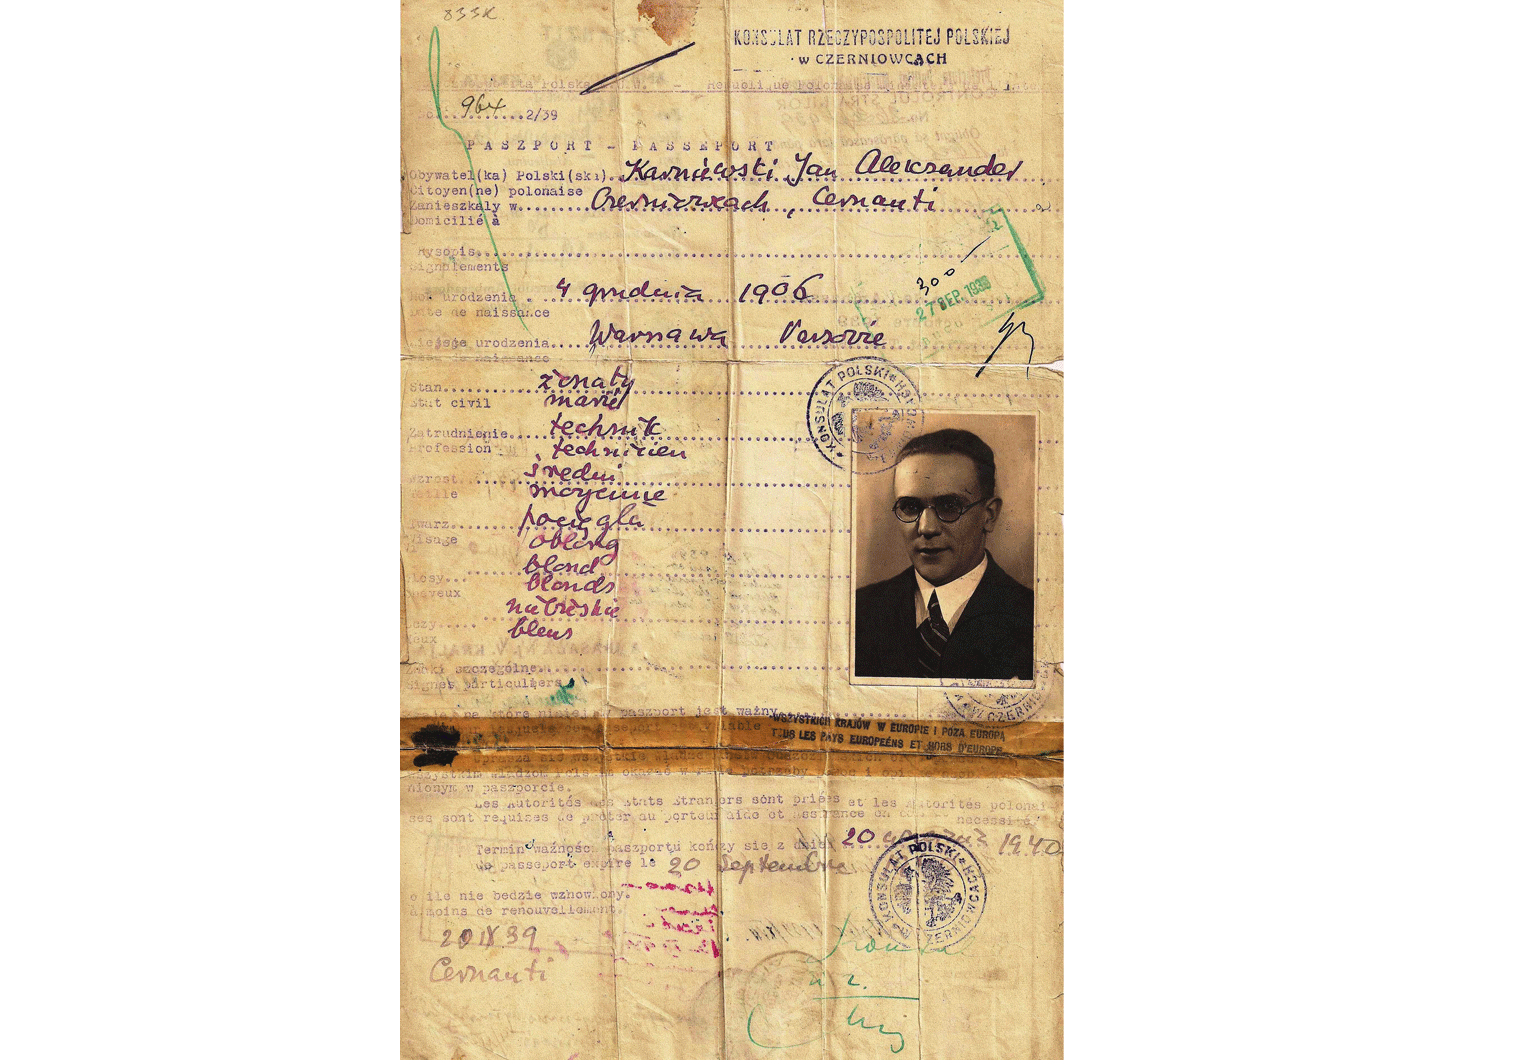 WWII Polish emergency passports